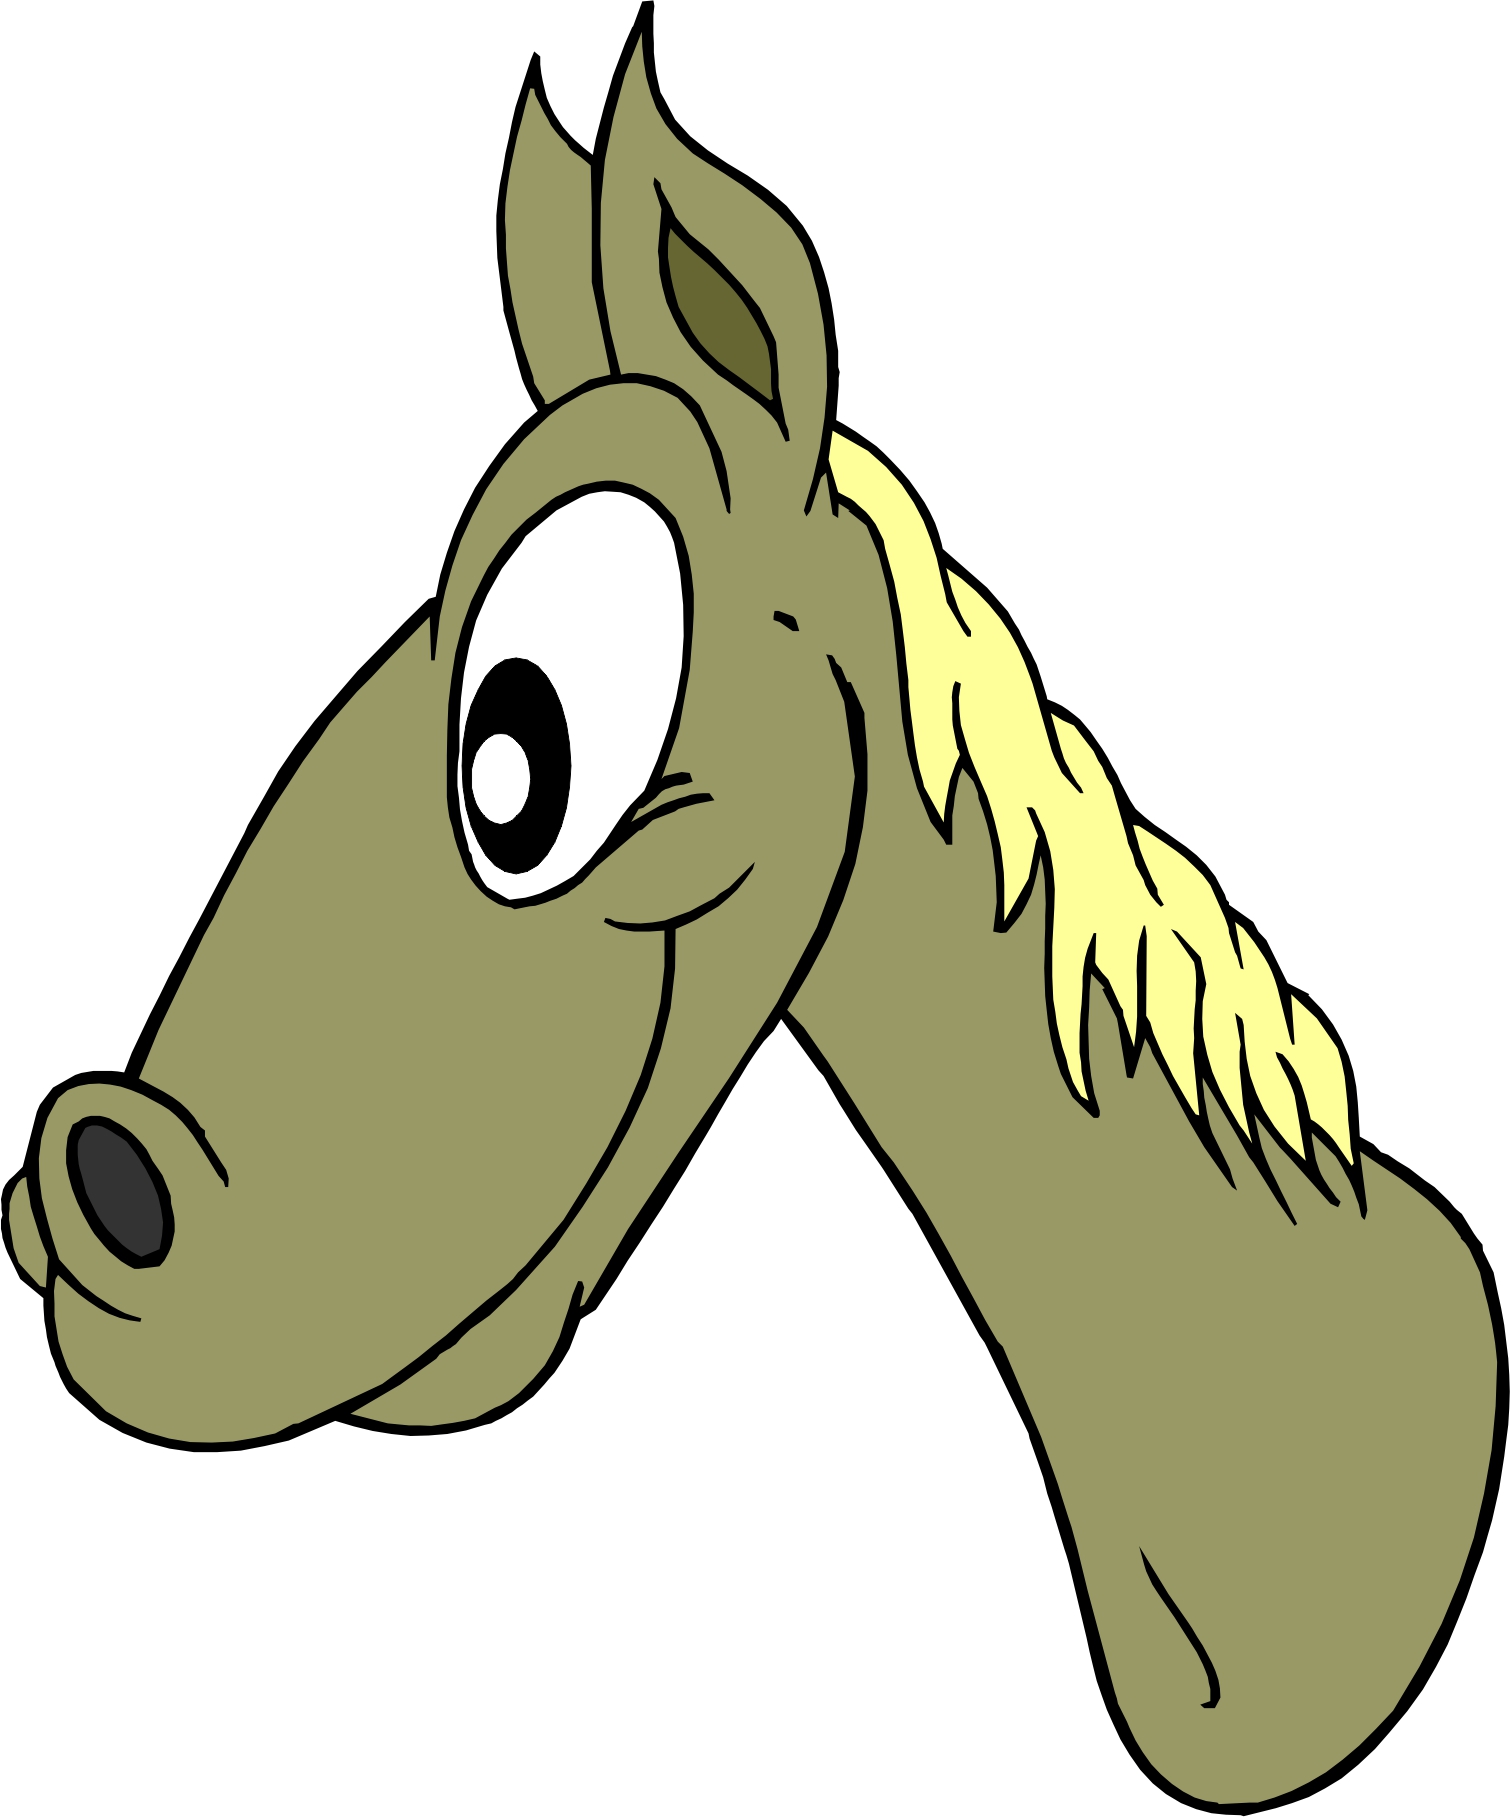 Cartoon Horses Head - ClipArt Best - Cliparts.co